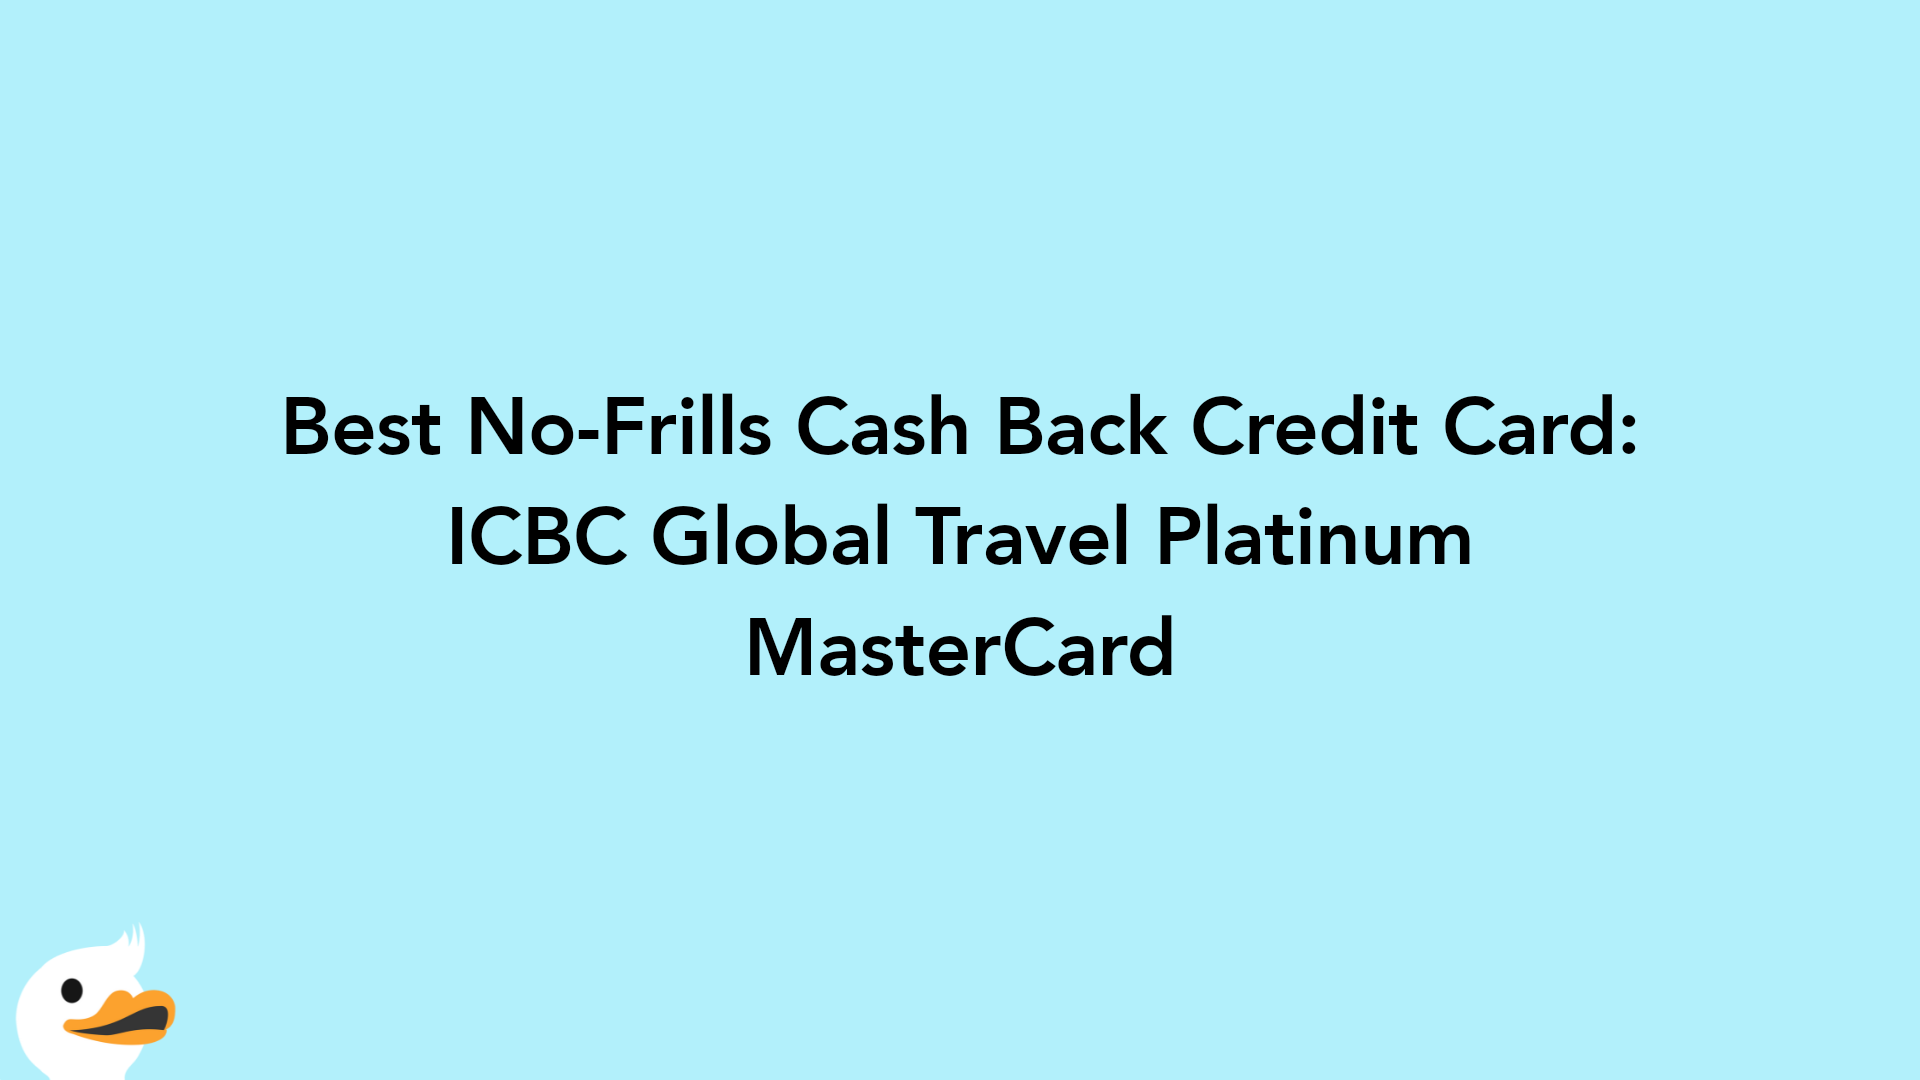 Best No-Frills Cash Back Credit Card: ICBC Global Travel Platinum MasterCard